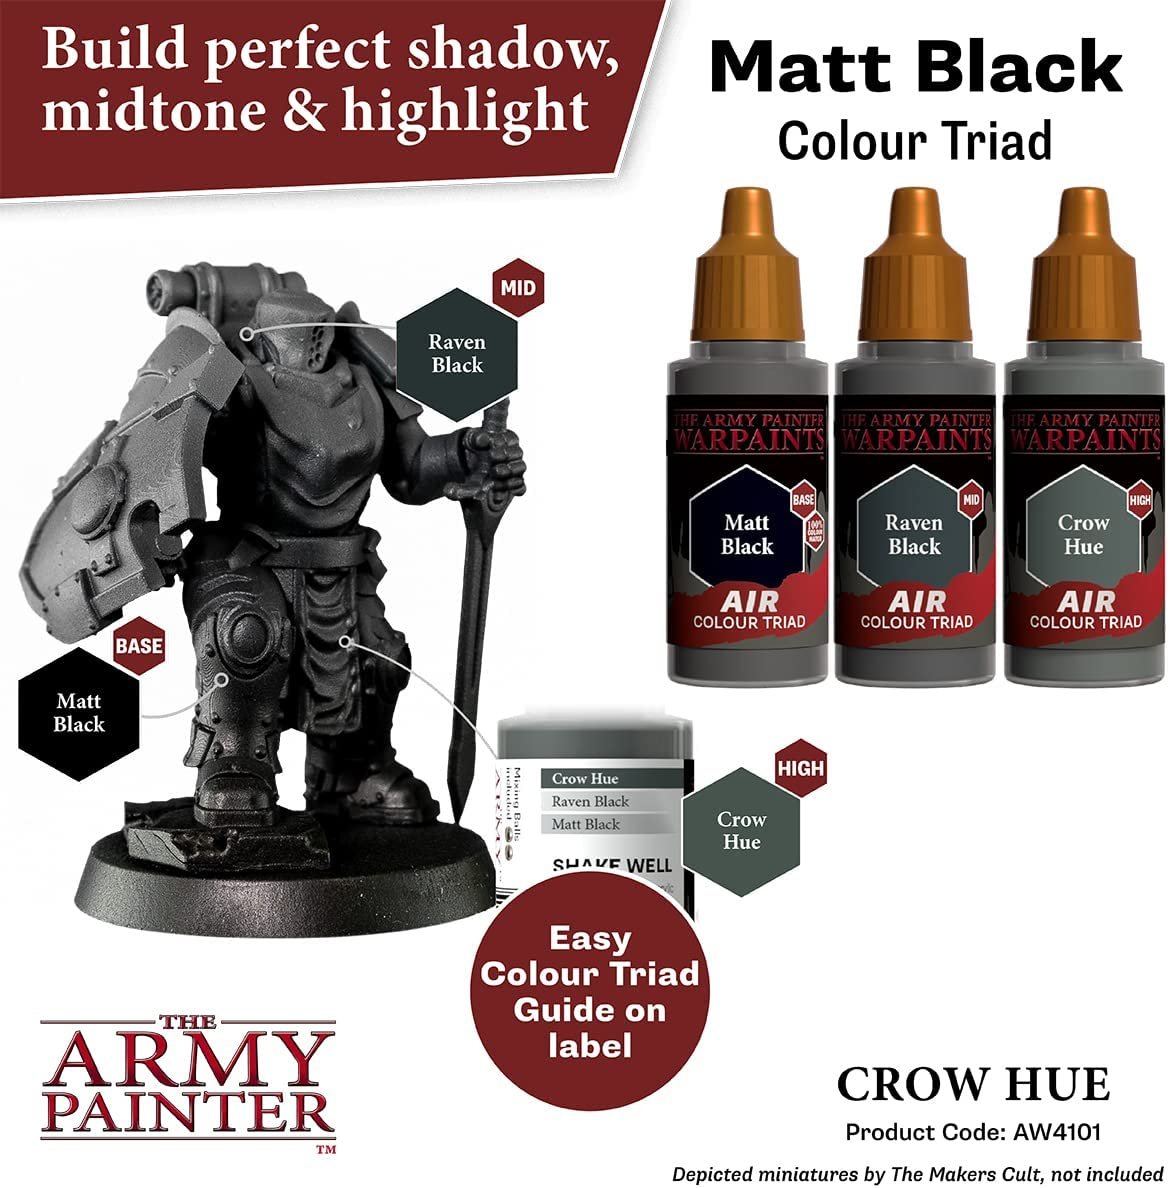 The Army Painter - Warpaints Air: Crow Hue (18ml/0.6oz)